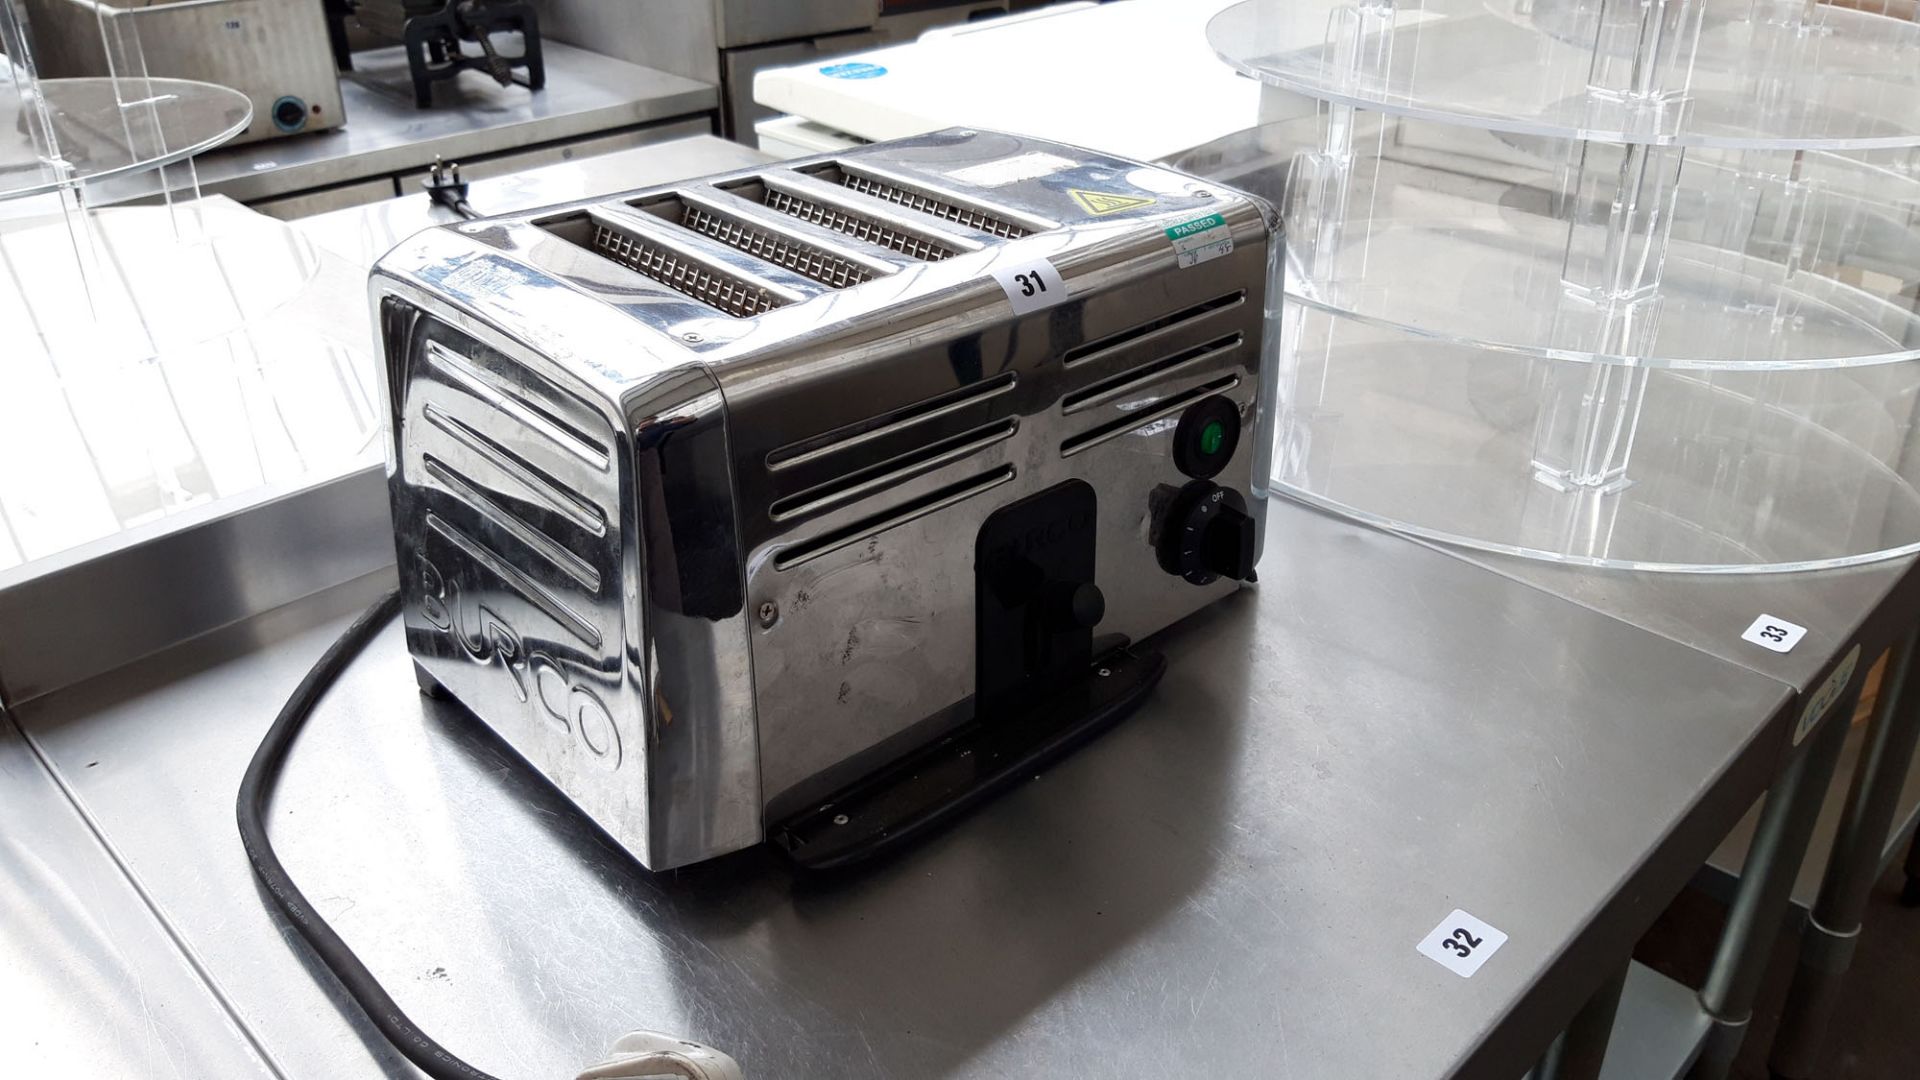 TN67 - Burco 4 slice toaster